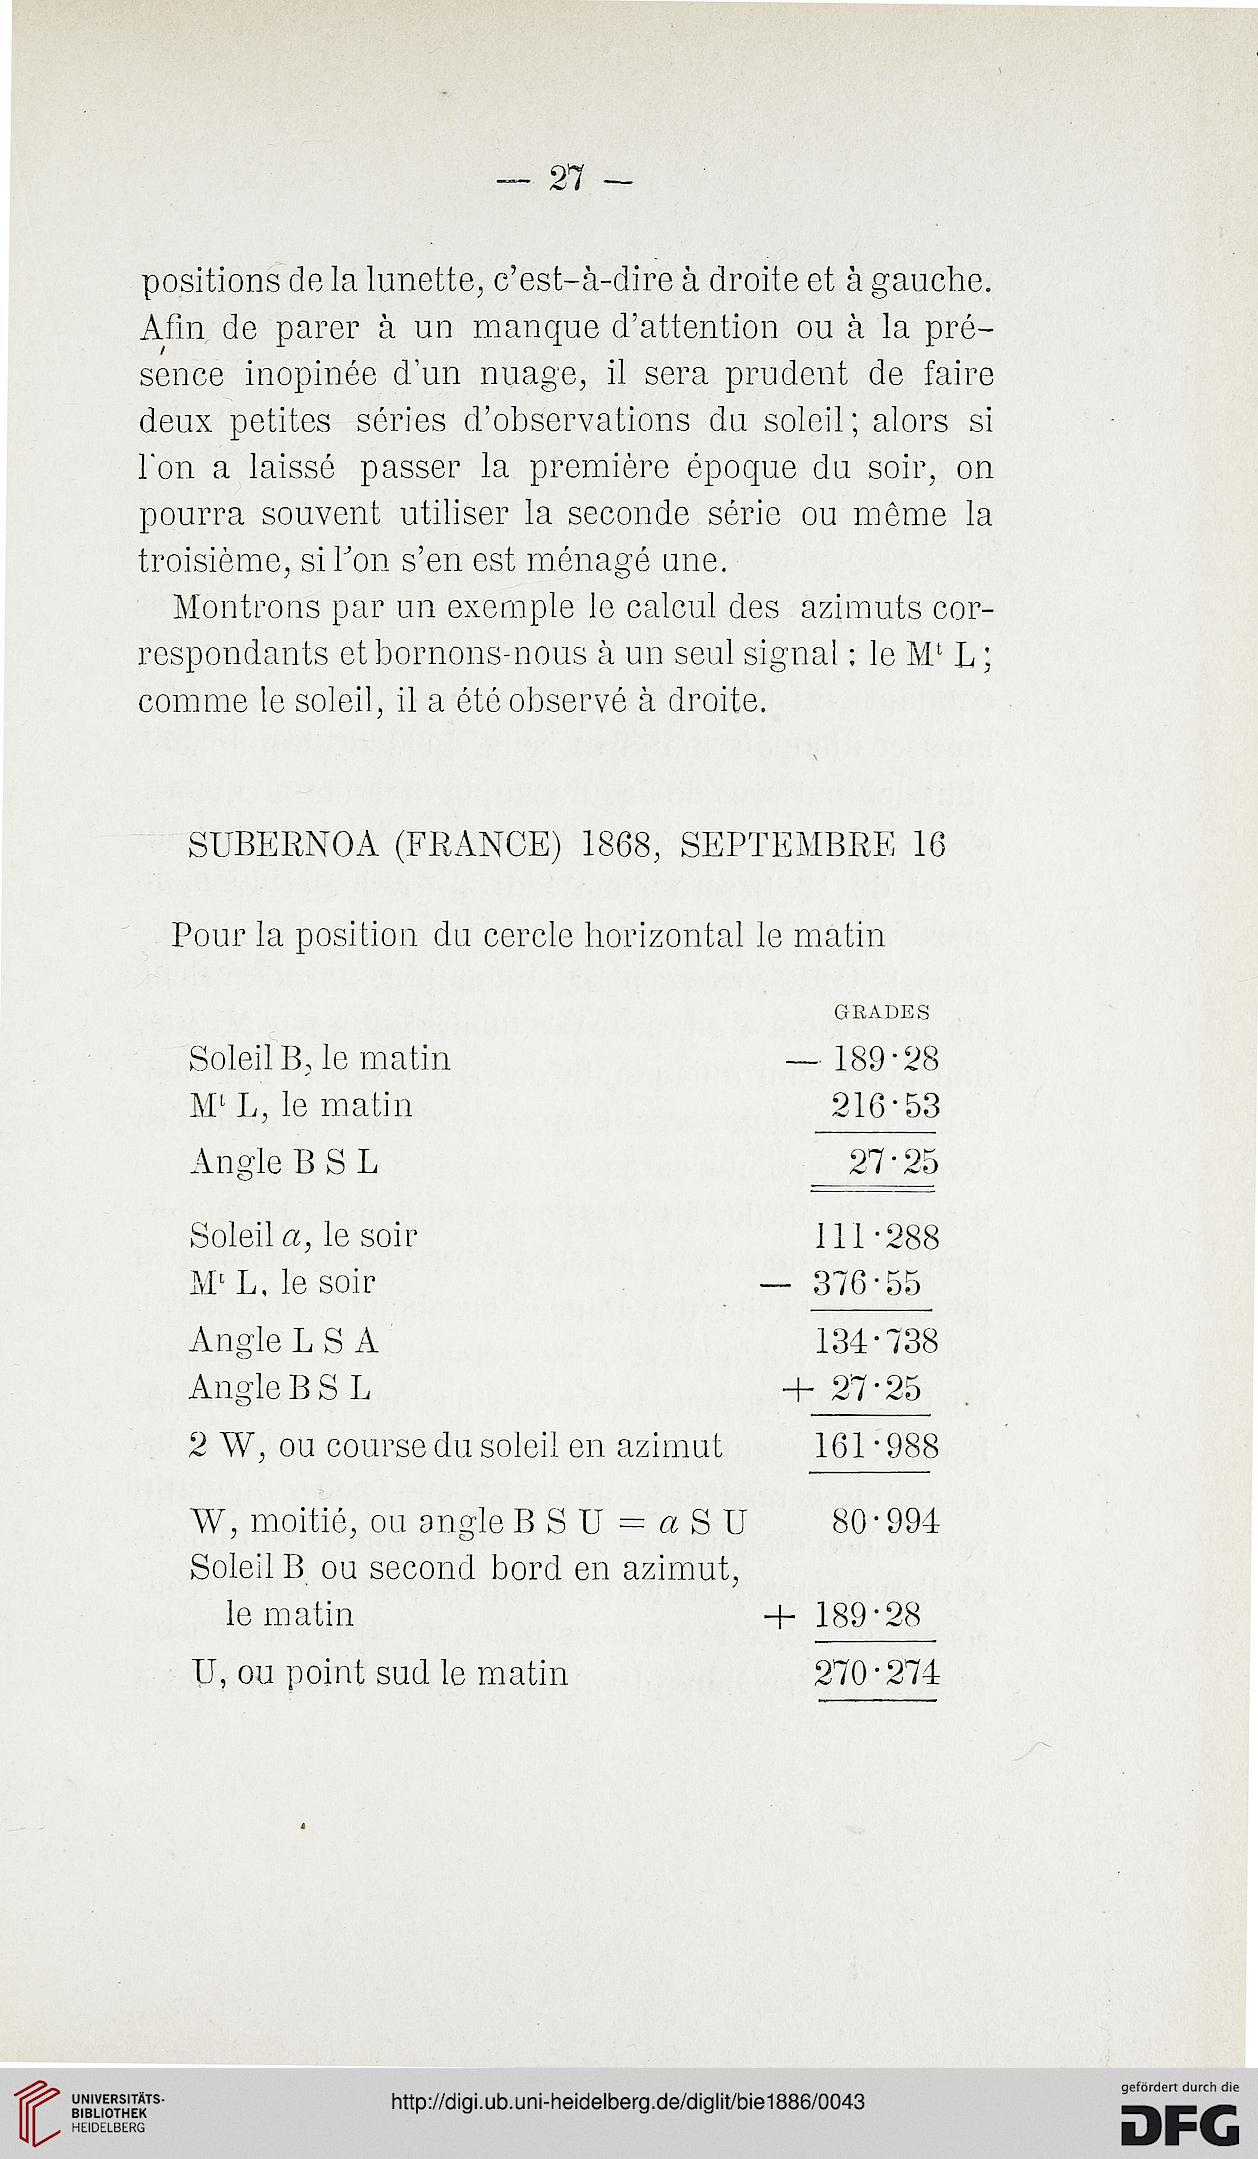 institut egyptien al qahira hrsg bulletin de l institut egyptien 2 ser 7 1886 1887